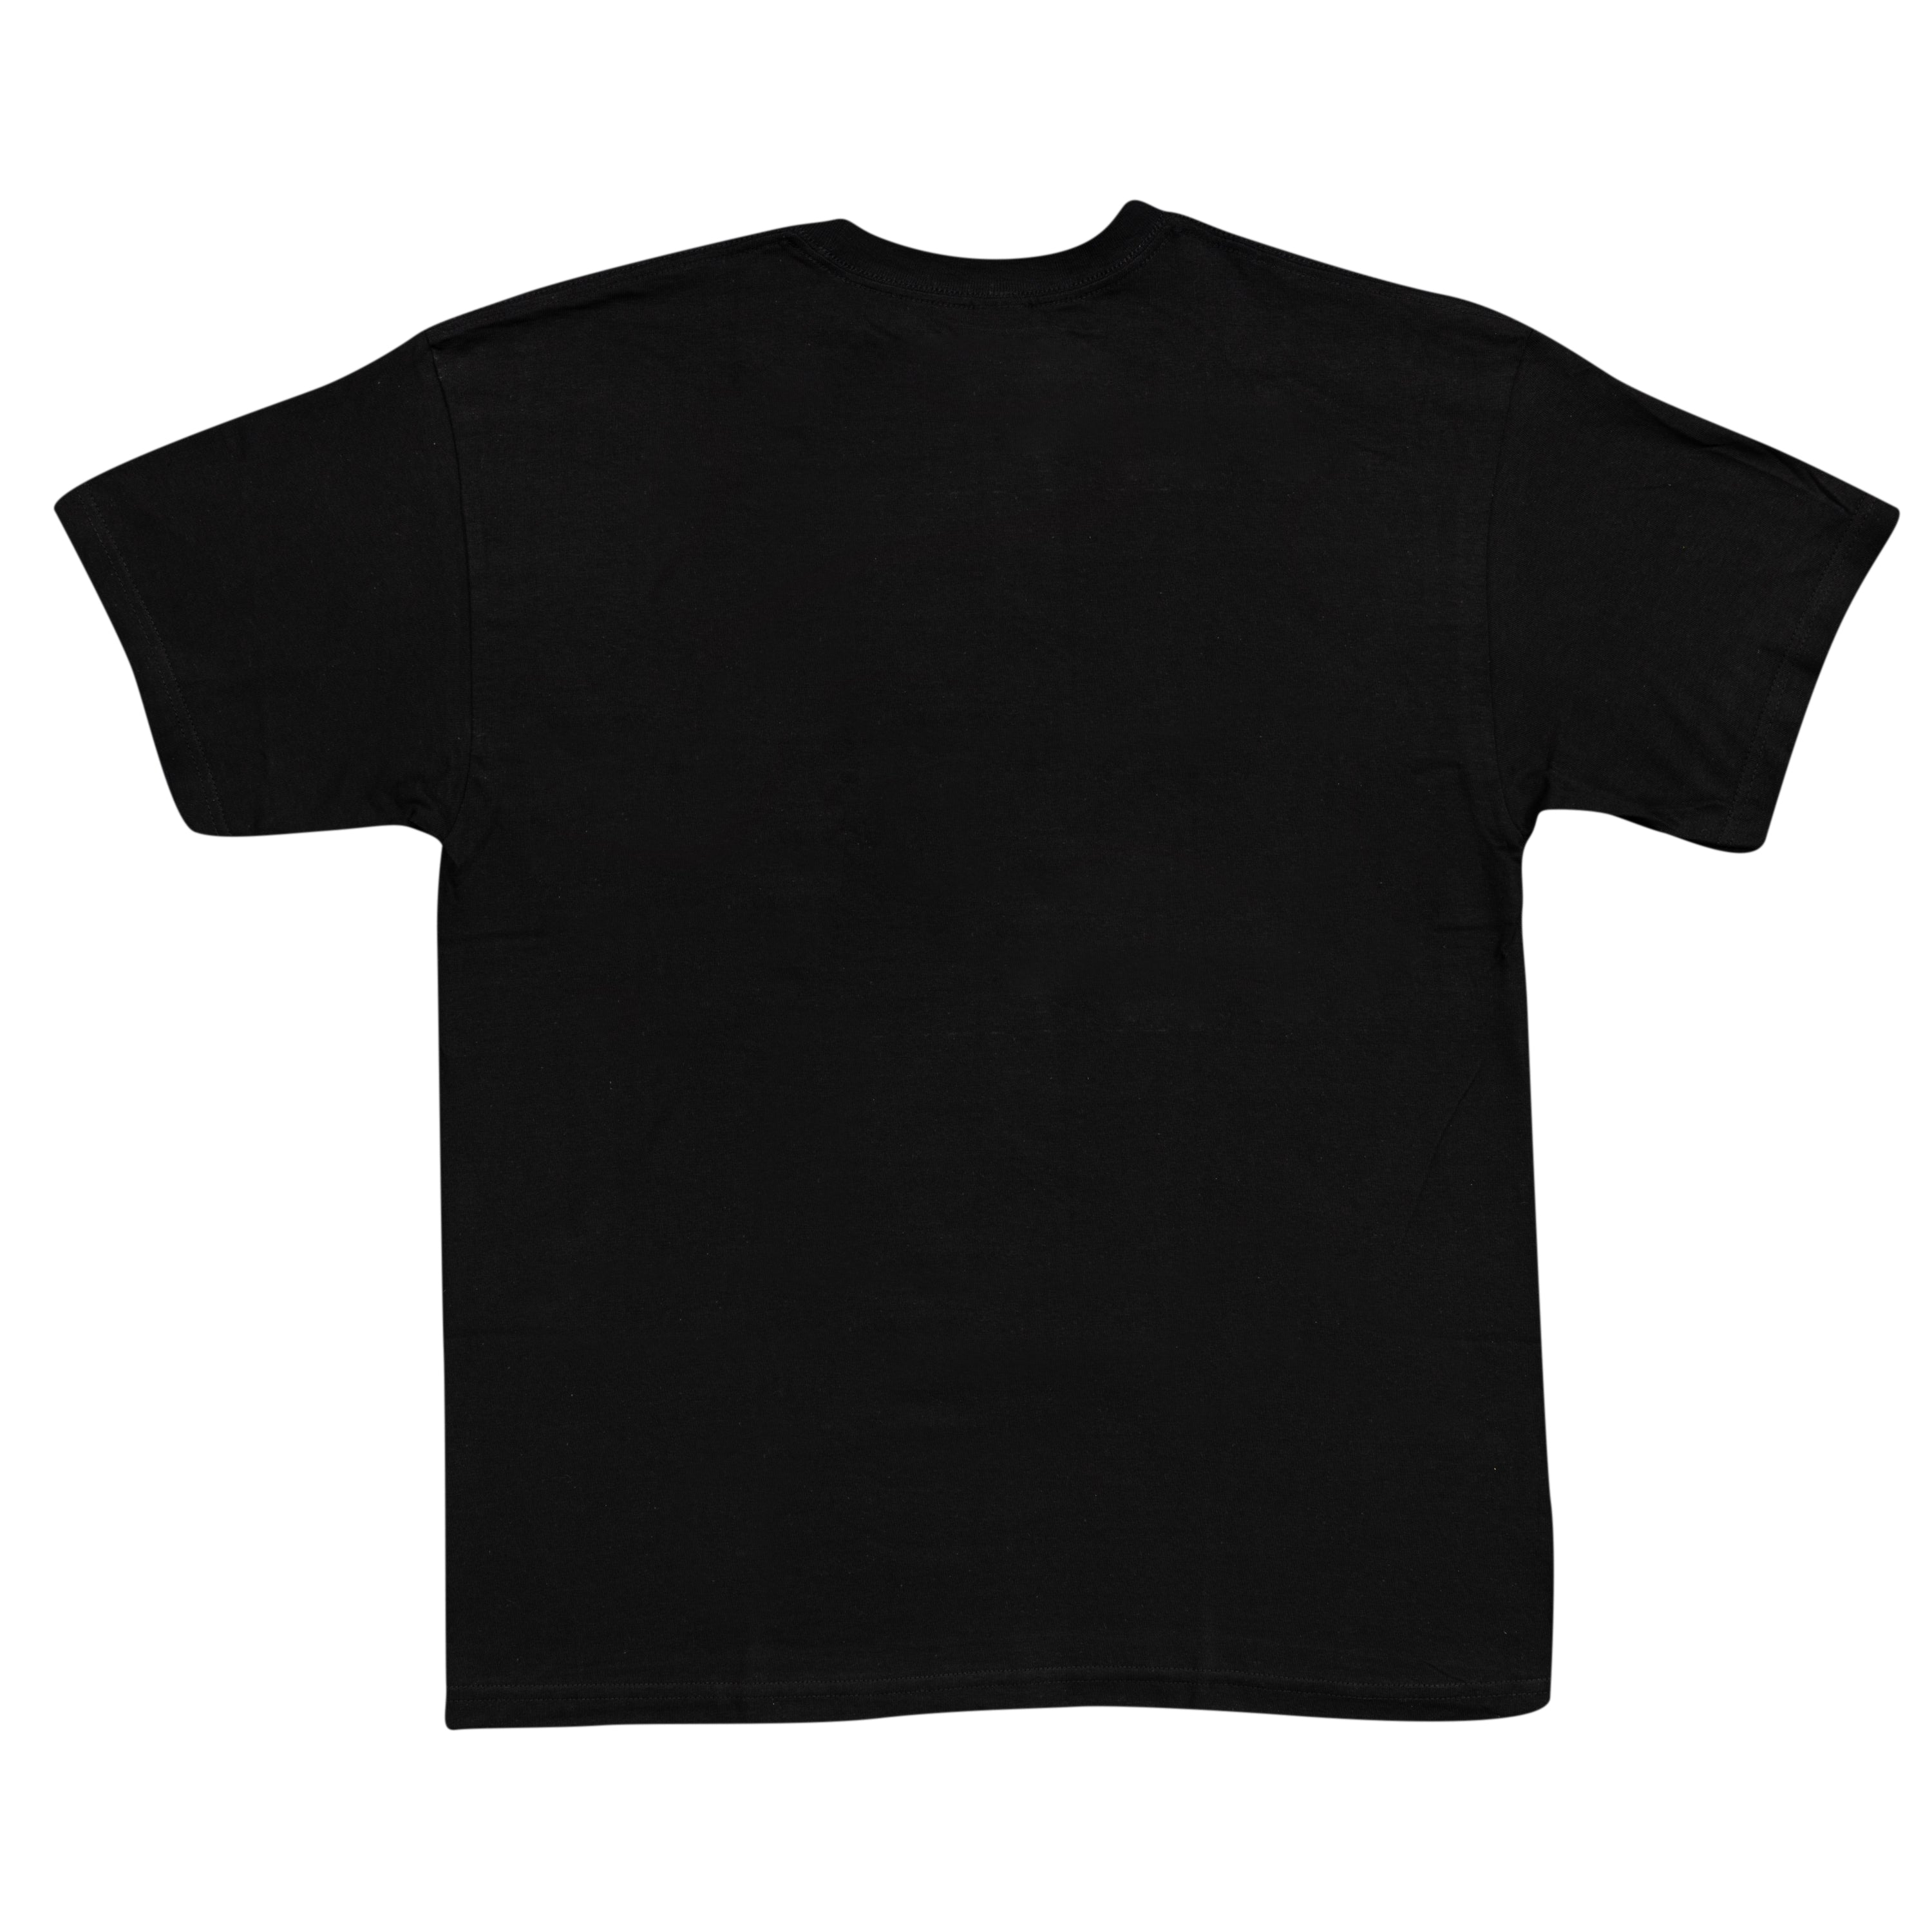 Revenge of the Nerds Lambda Lambda Lambda Adult Black T-Shirt